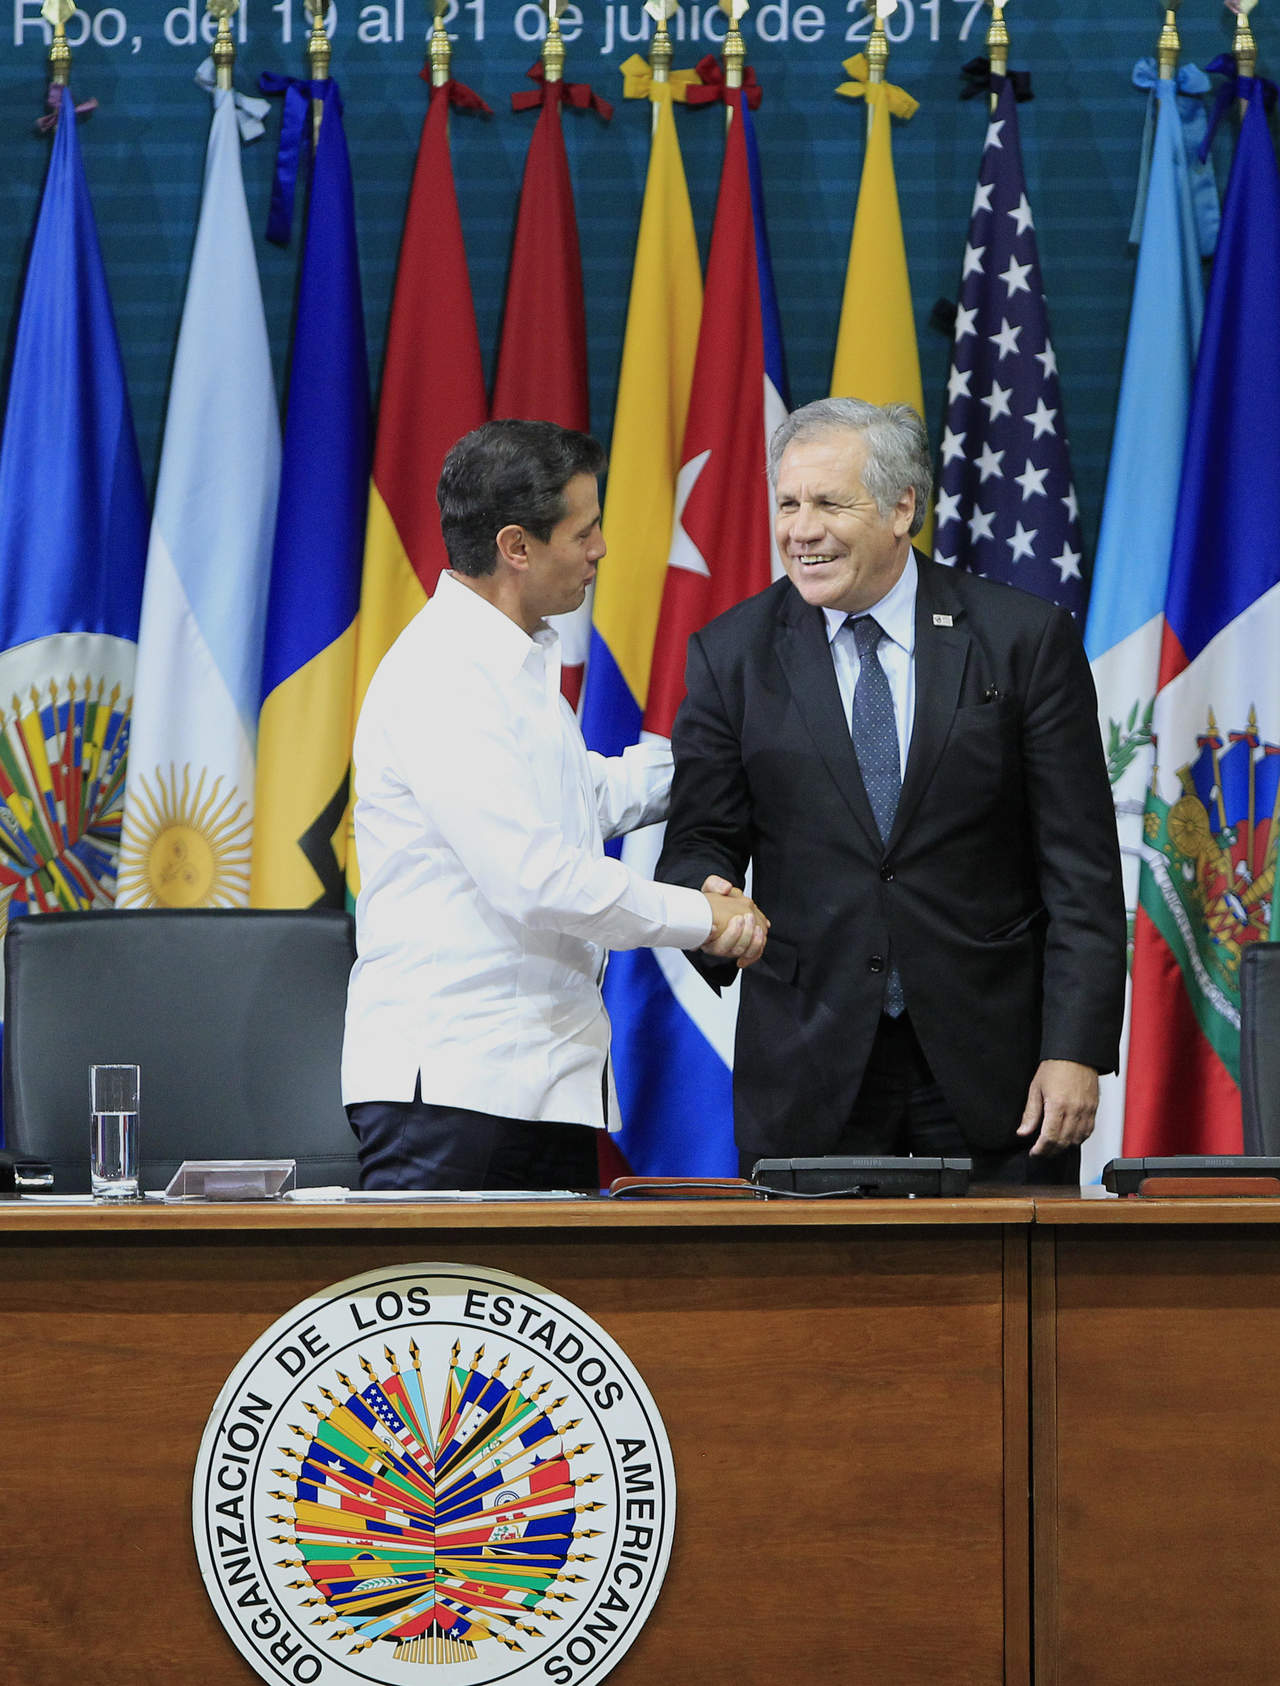 Inicio. Peña inauguró la Asamblea de la OEA.